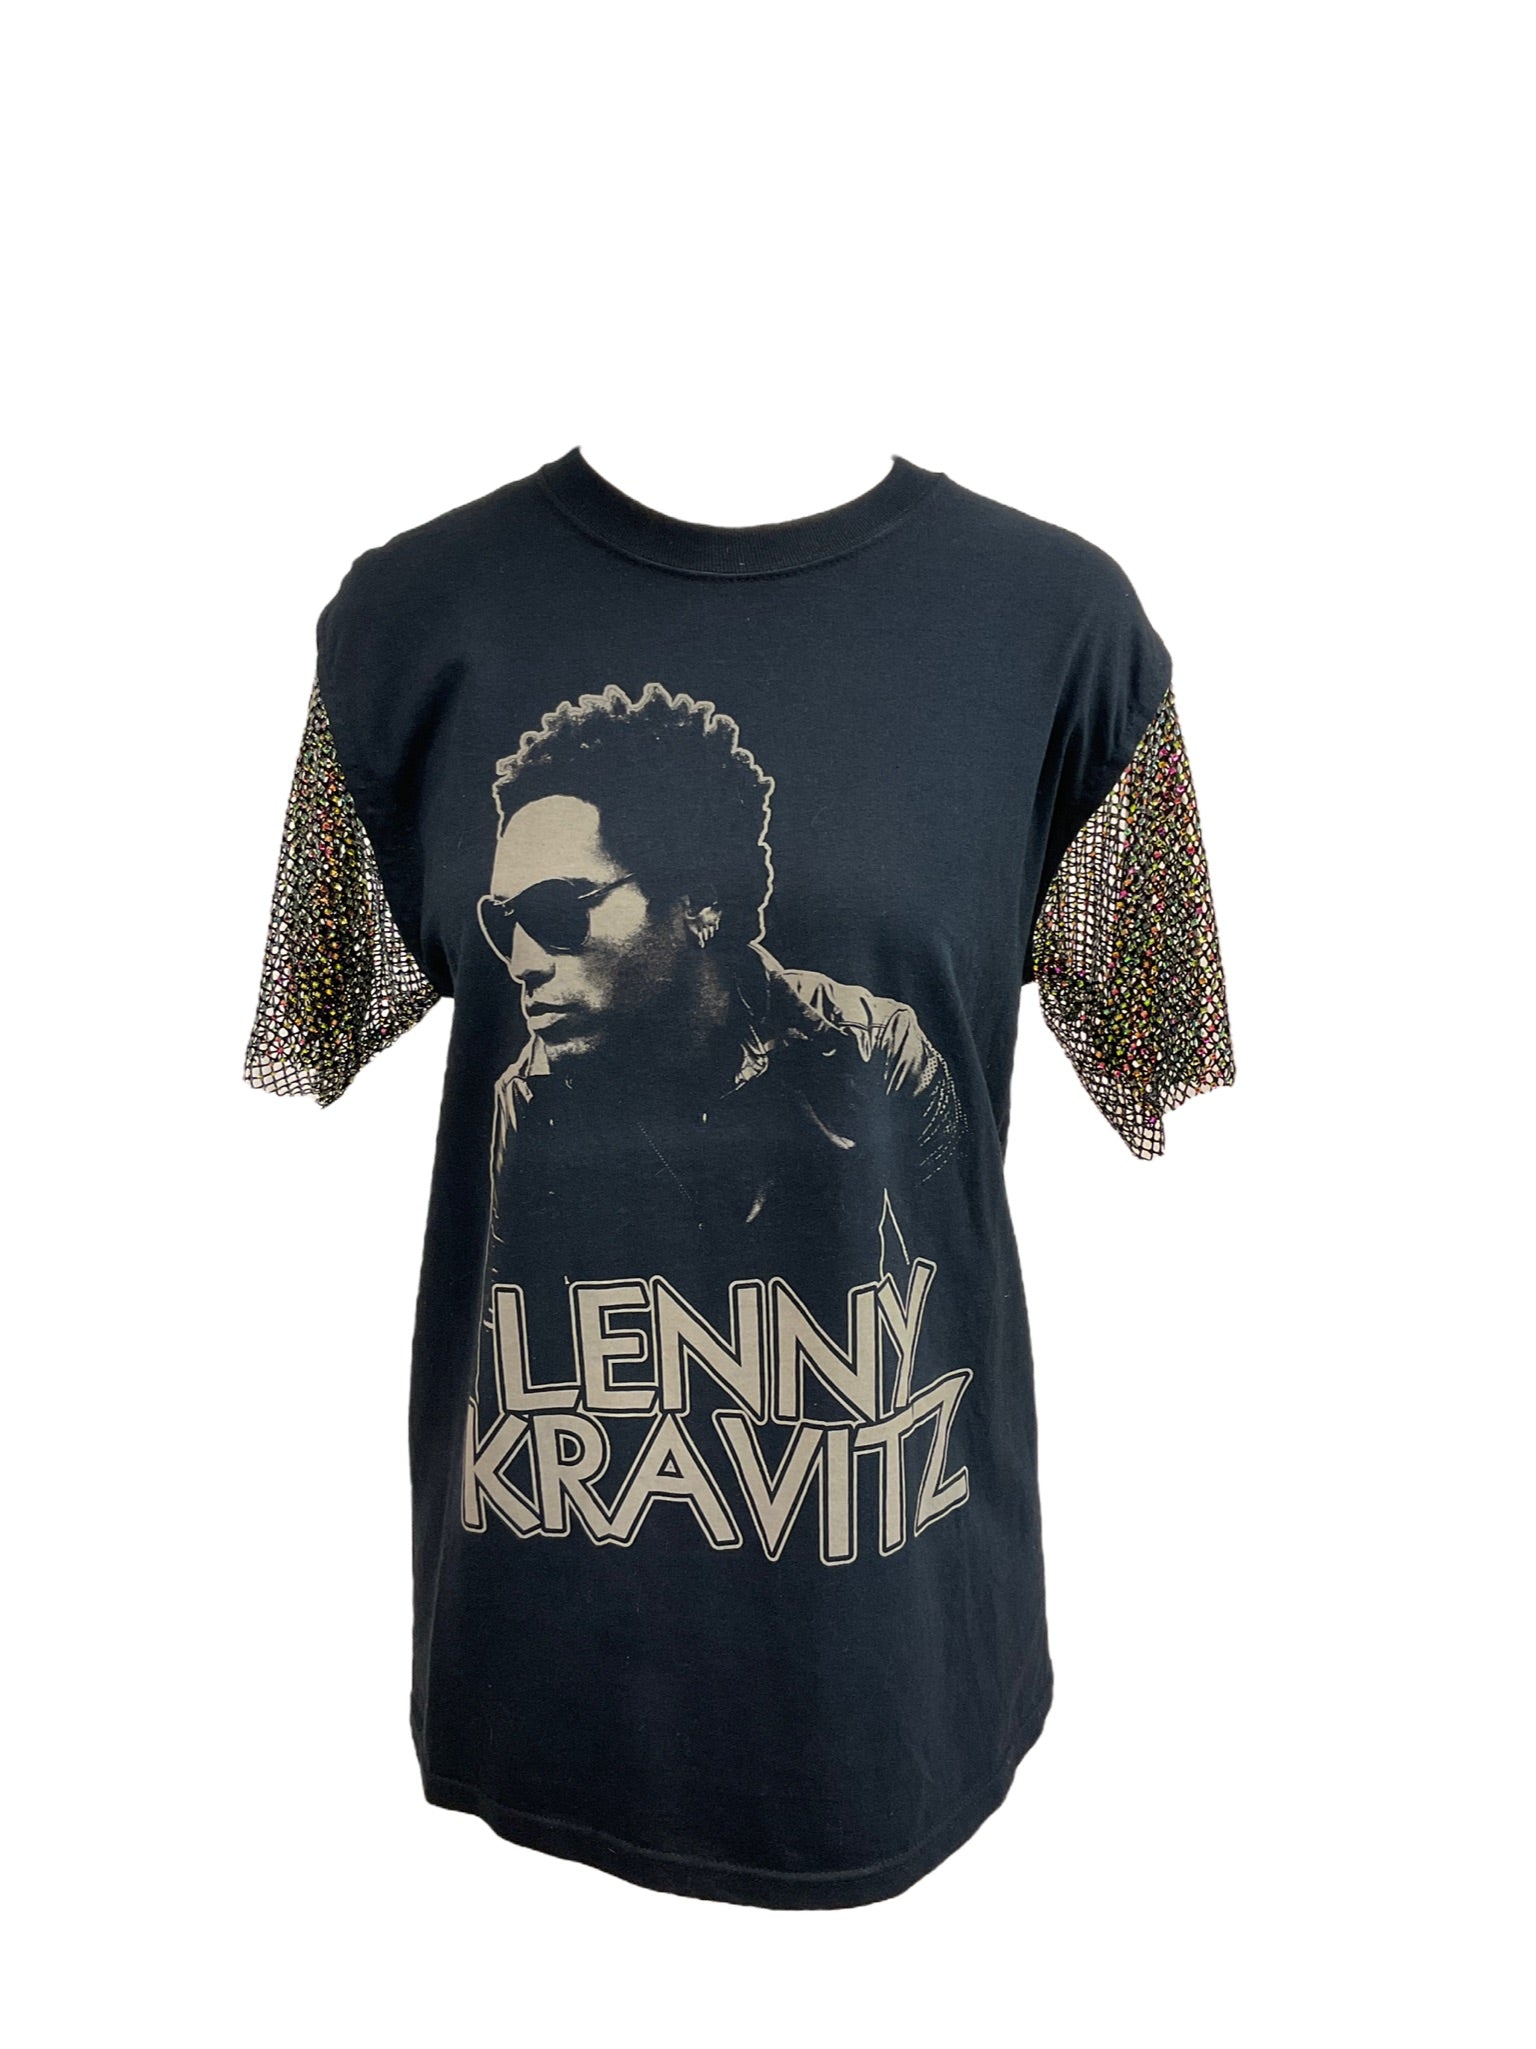 Lenny Kravitz Crystal Tee